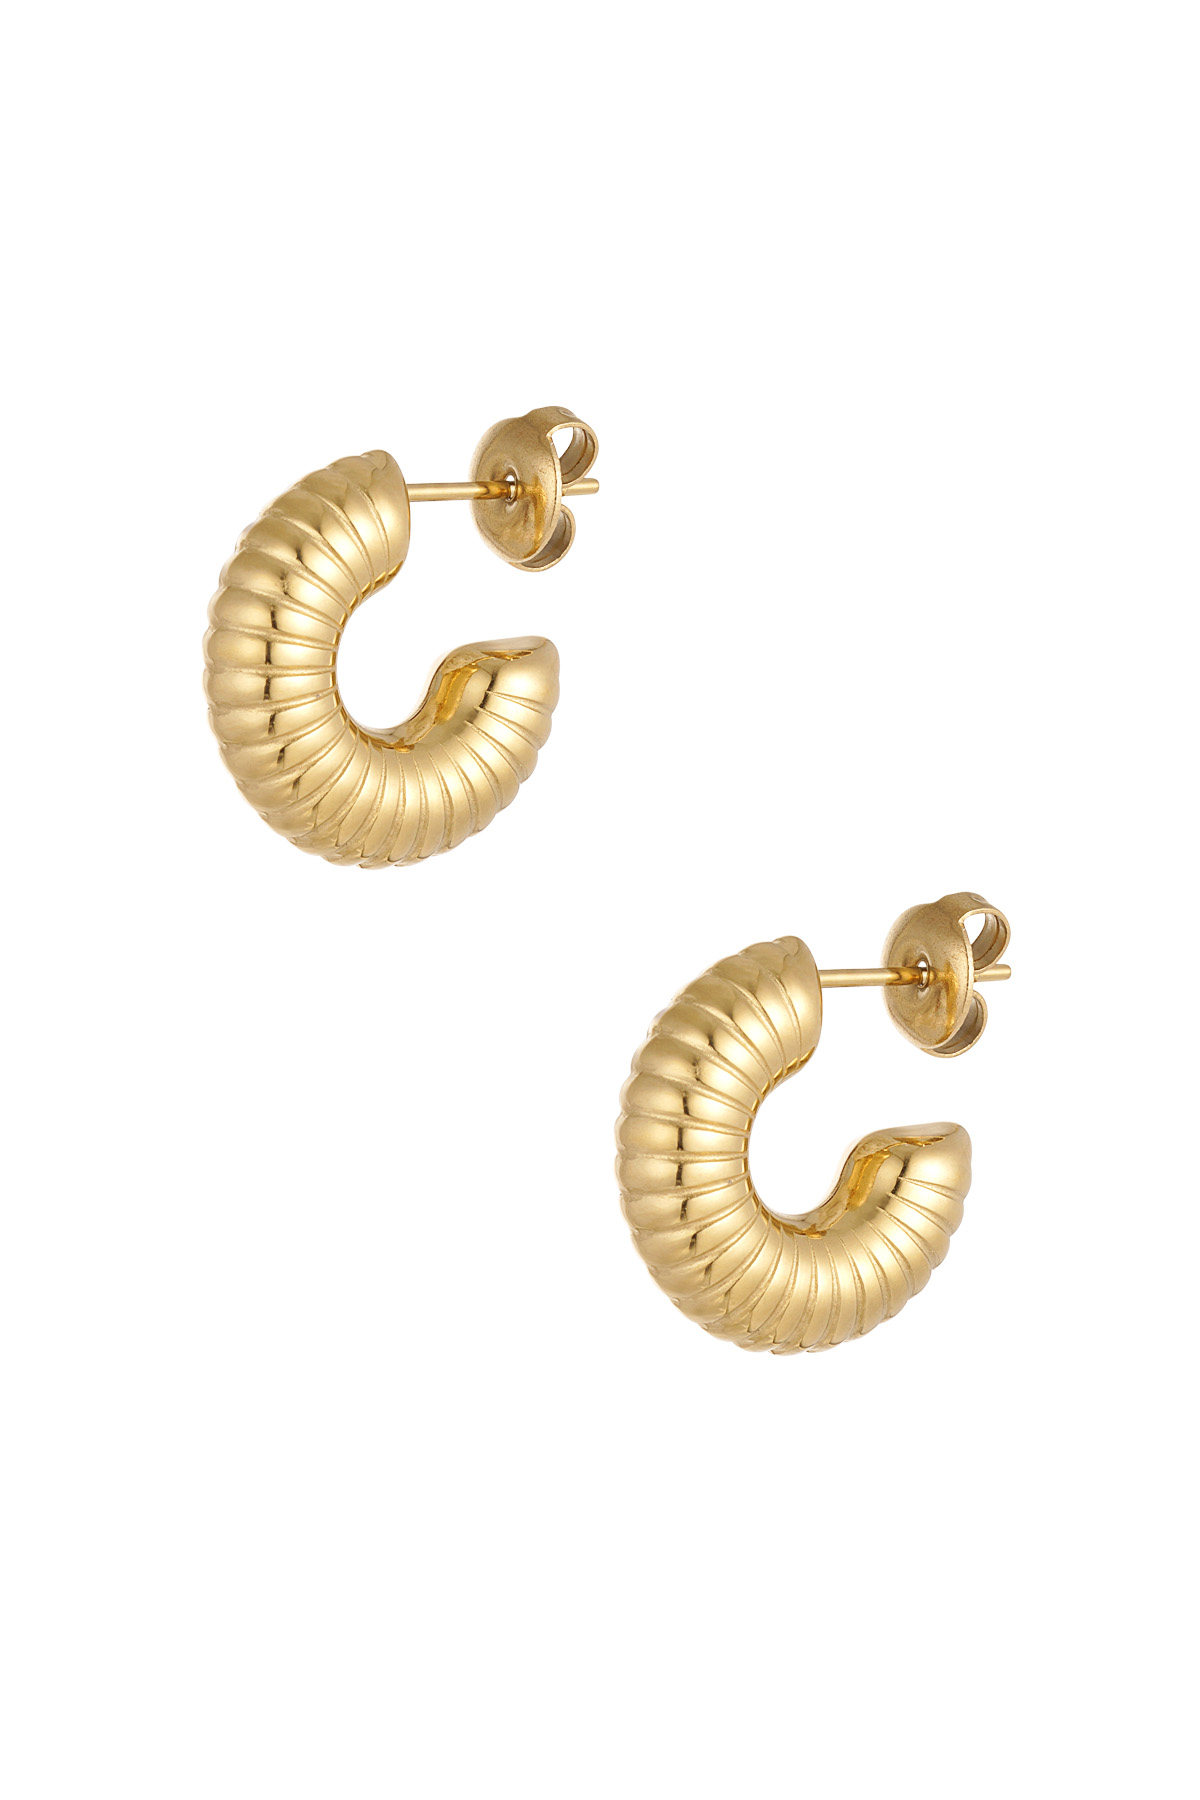 Earrings aesthetic half moon small - gold 